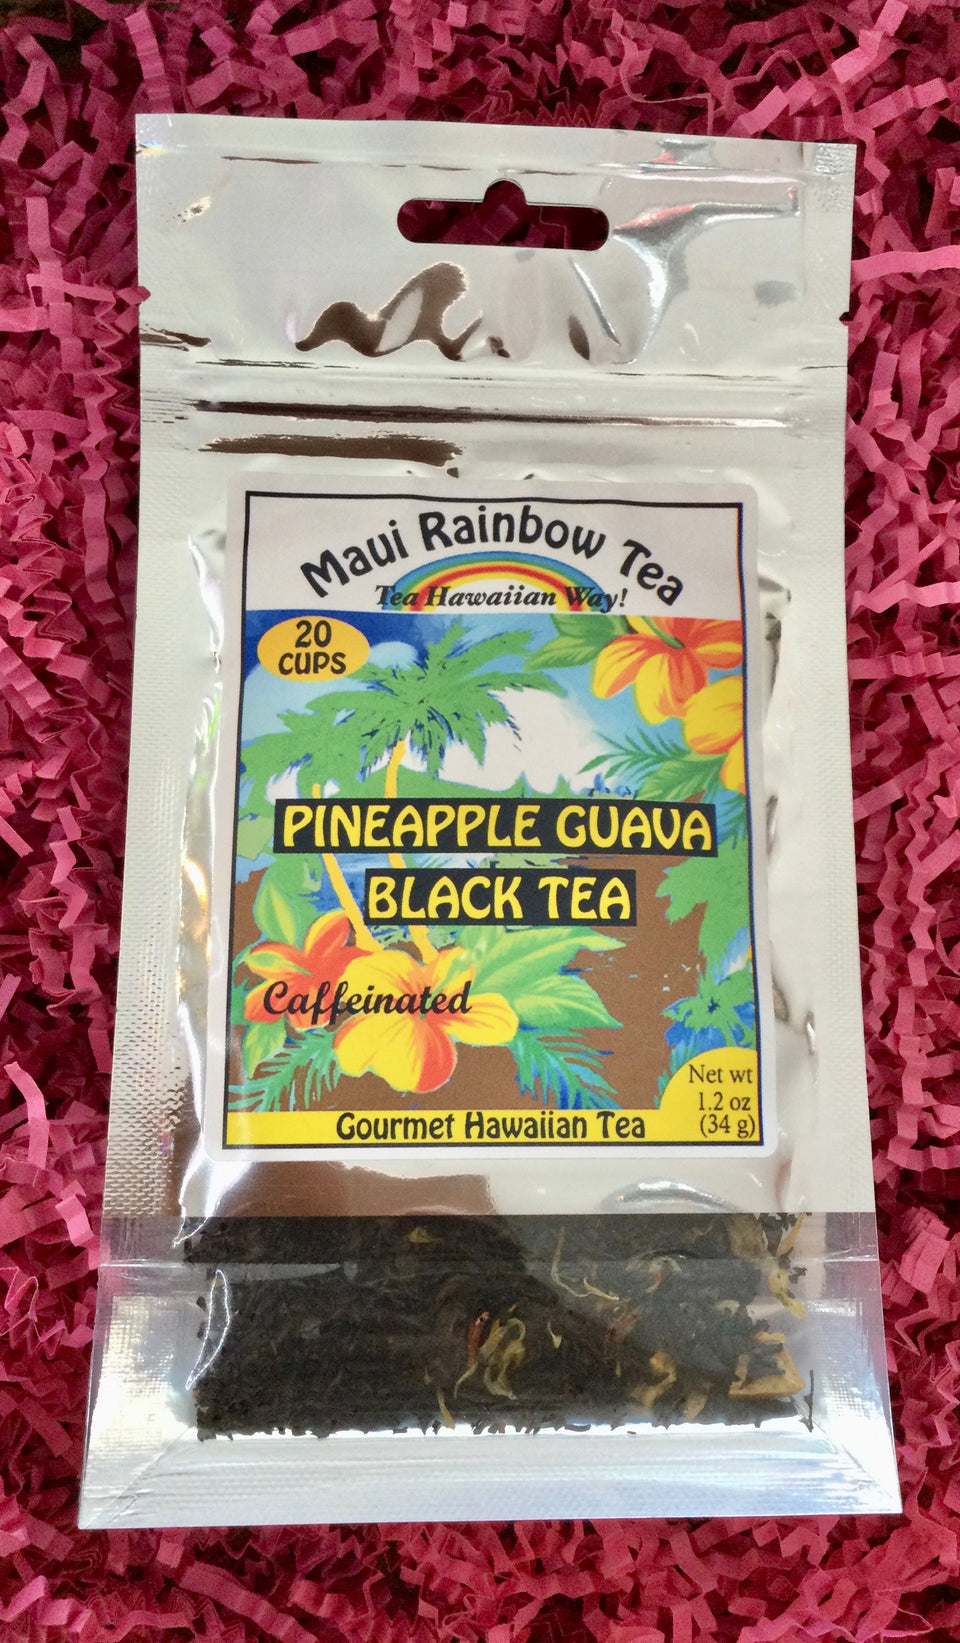 Pineapple black tea from Maui Rainbow tea in package